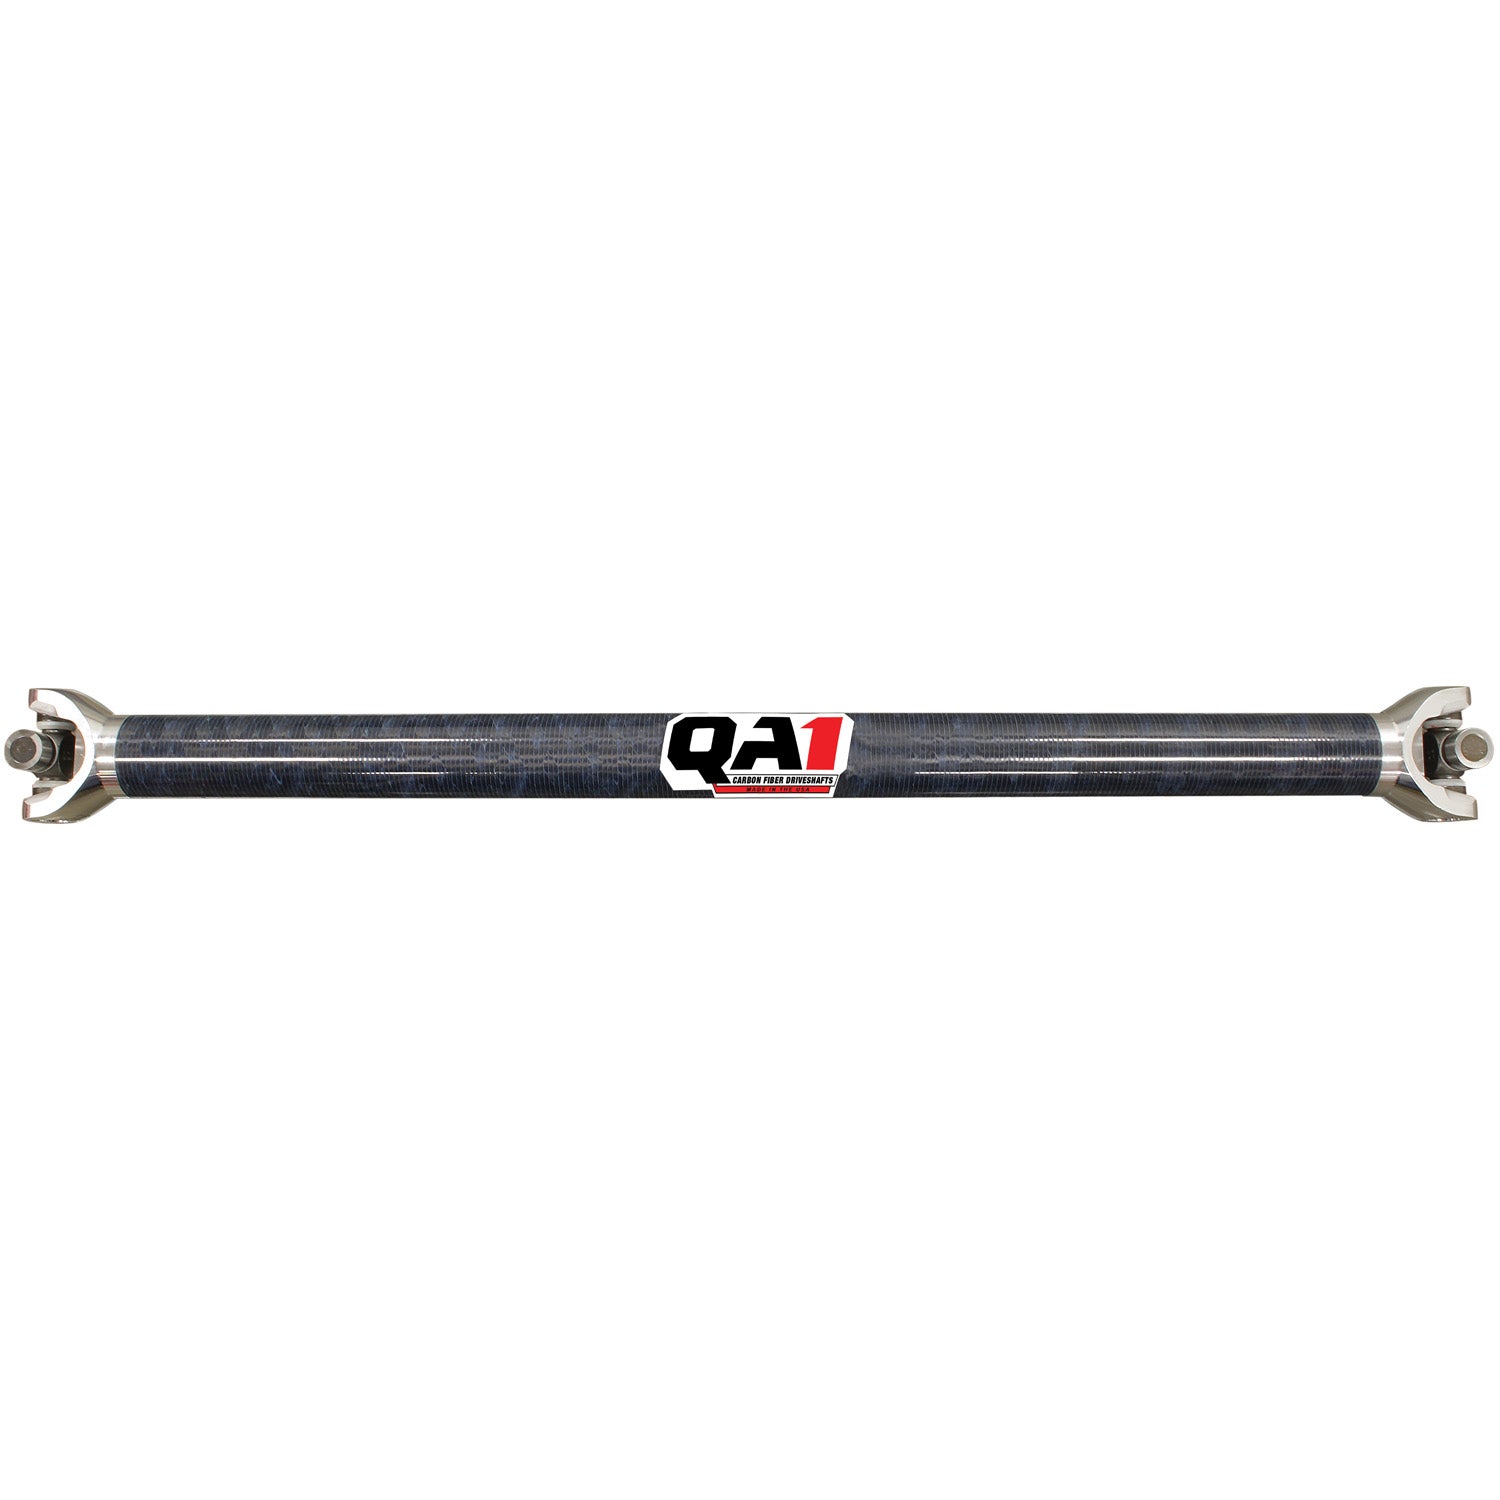 QA1 JJ-12209 Driveshaft, CF, CT-Dirt-Mod, 29.00 inch 2.3 inch, 1310 U-Joint, 1500Lb.